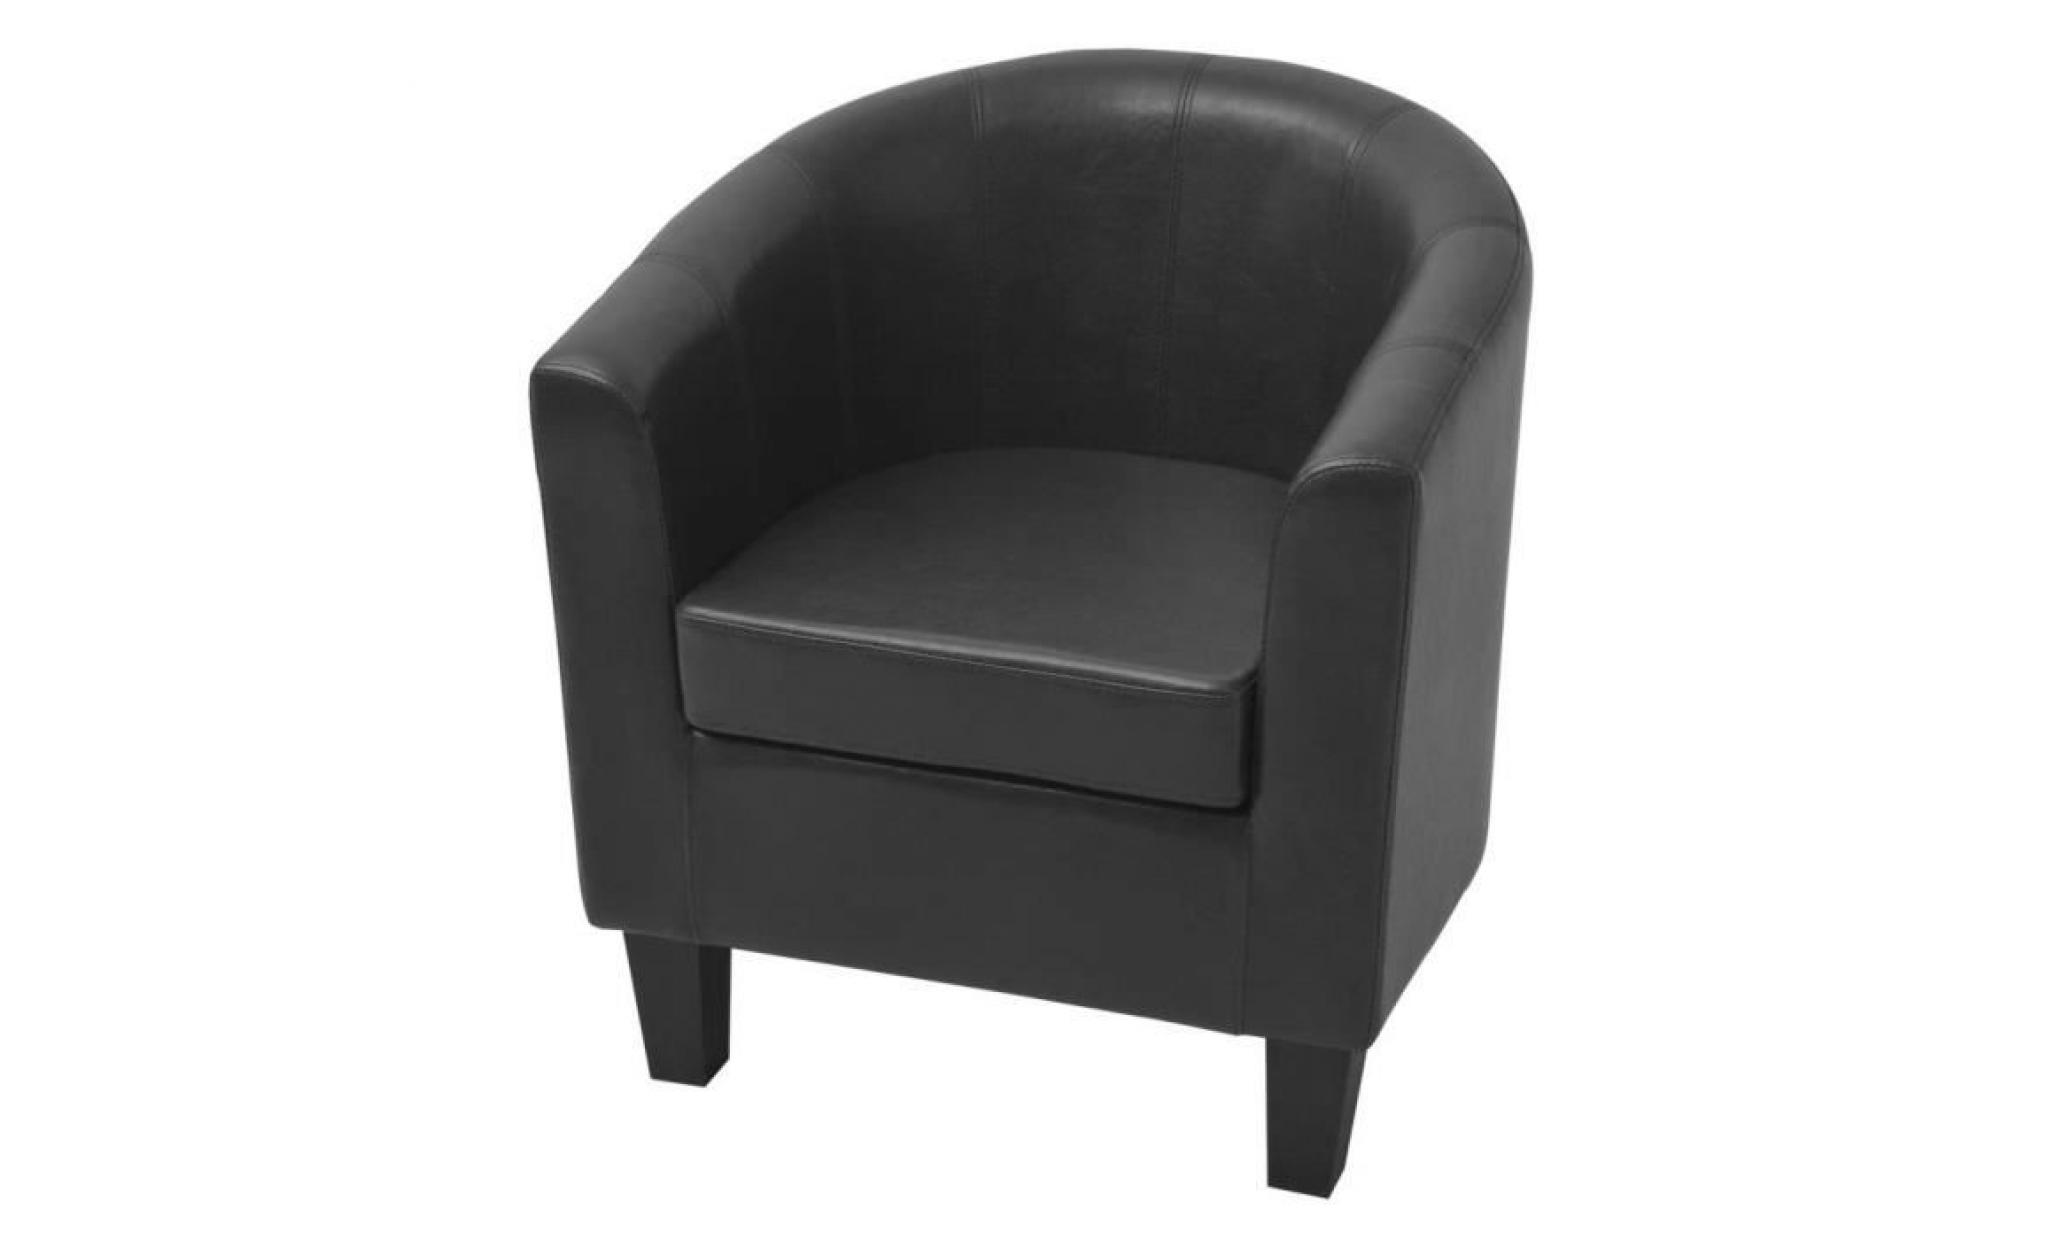 fauteuil cuir artificiel noir fauteuil relax fauteuil relaxation massage fauteuil scandinave pas cher